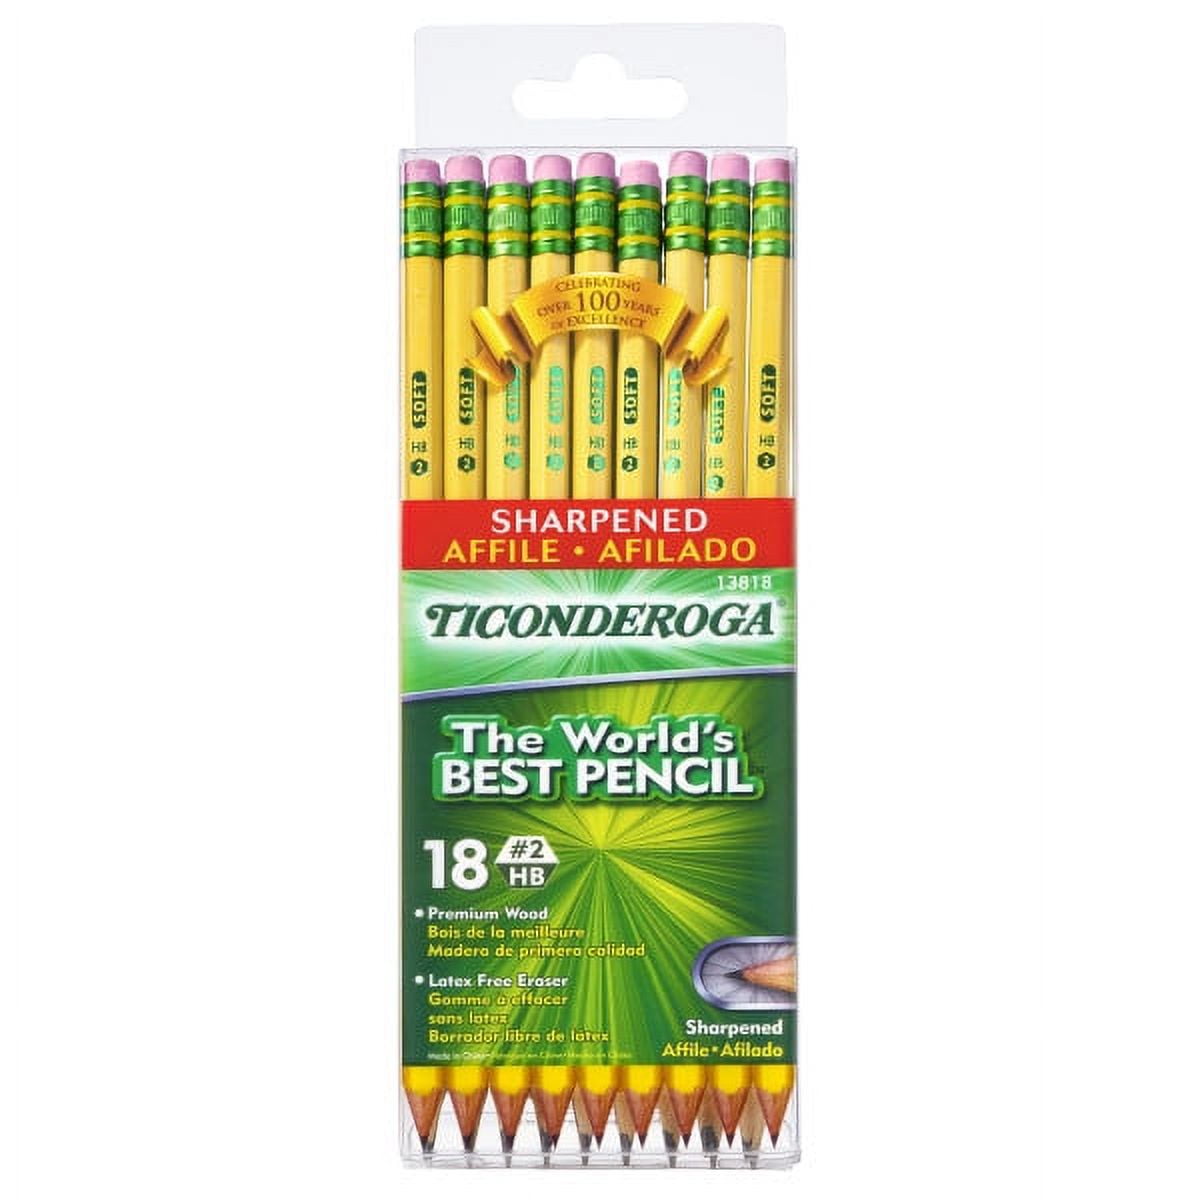 The Best Pencils